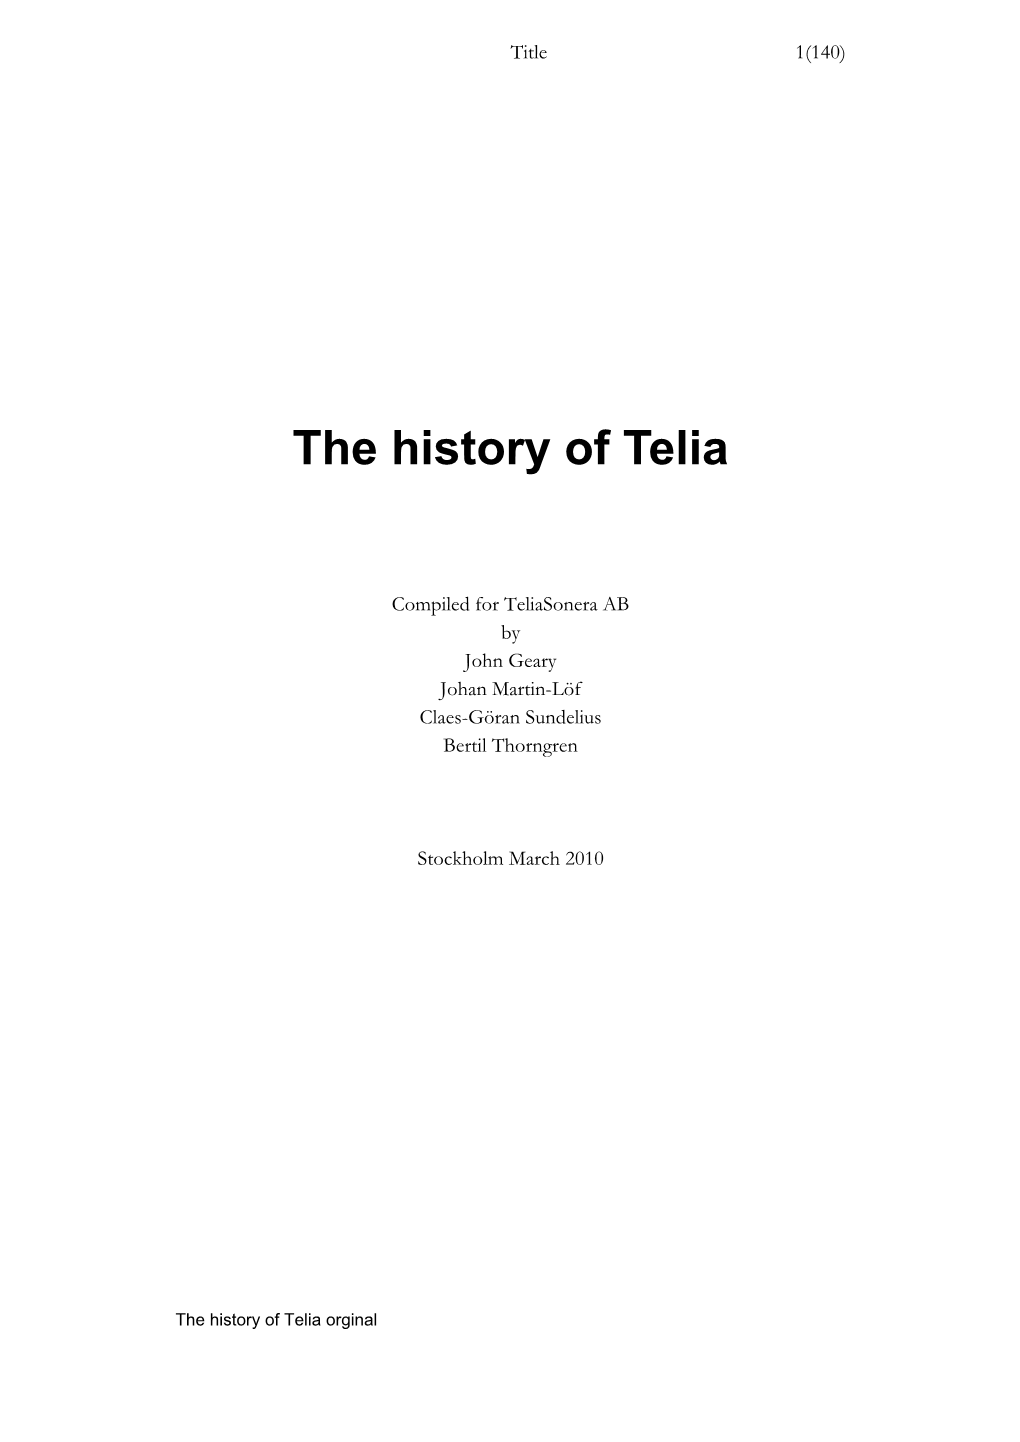 The History of Telia